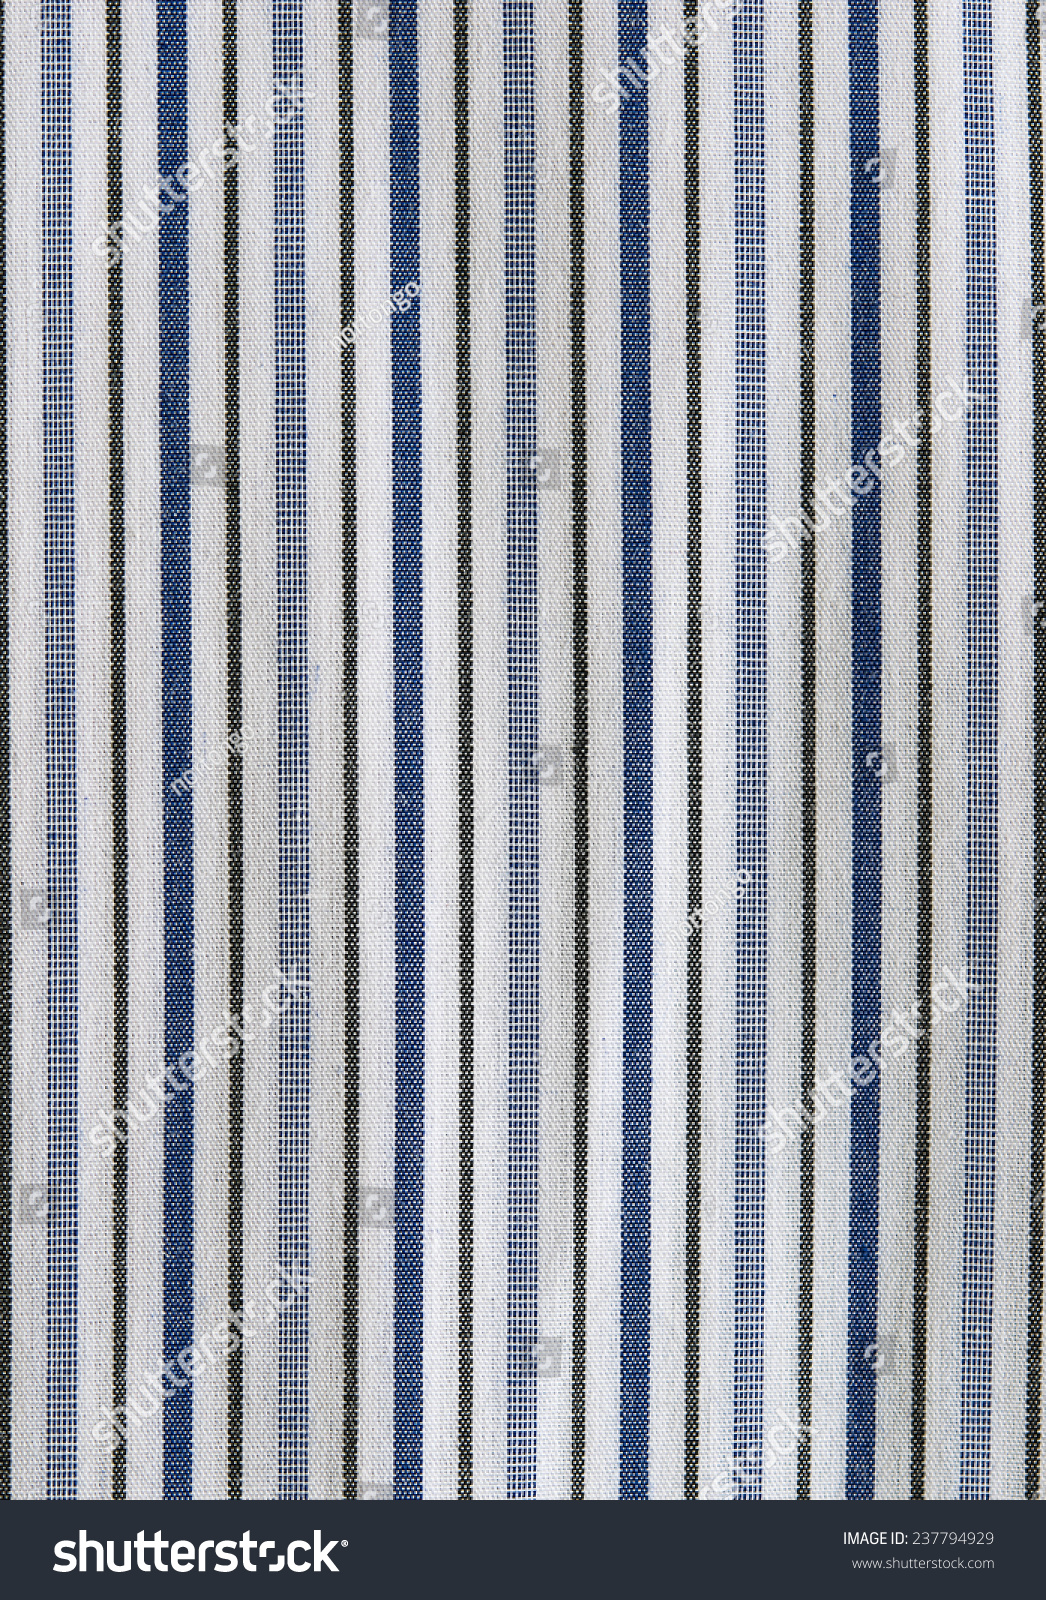 Patterns beautiful on the striped fabric #237794929